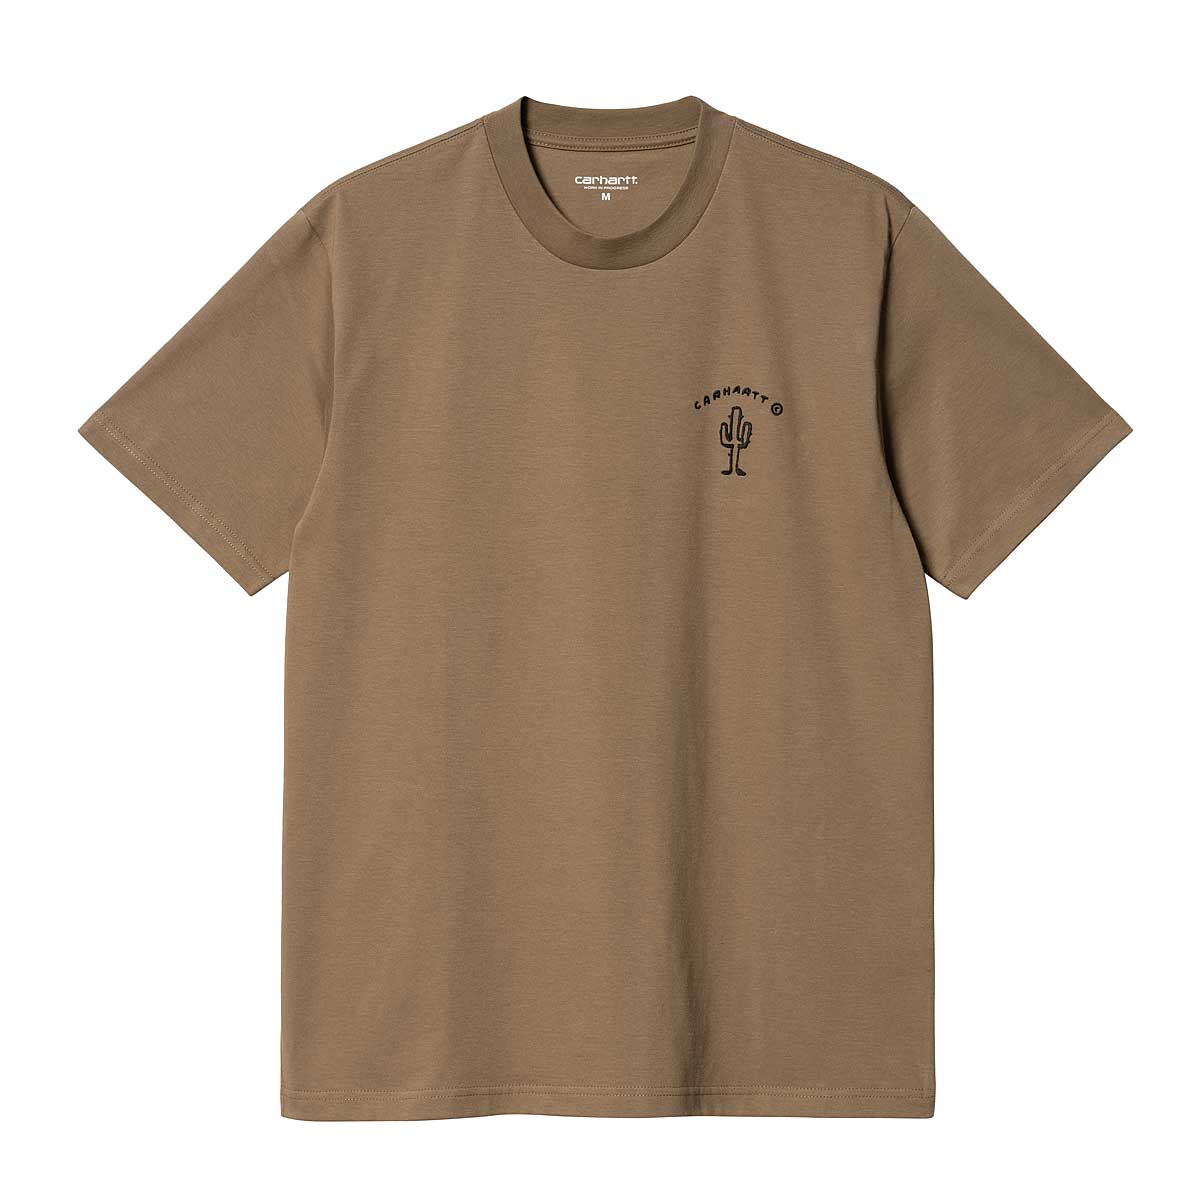 Carhartt Wip S/s New Frontier T-shirt, Braun/brown